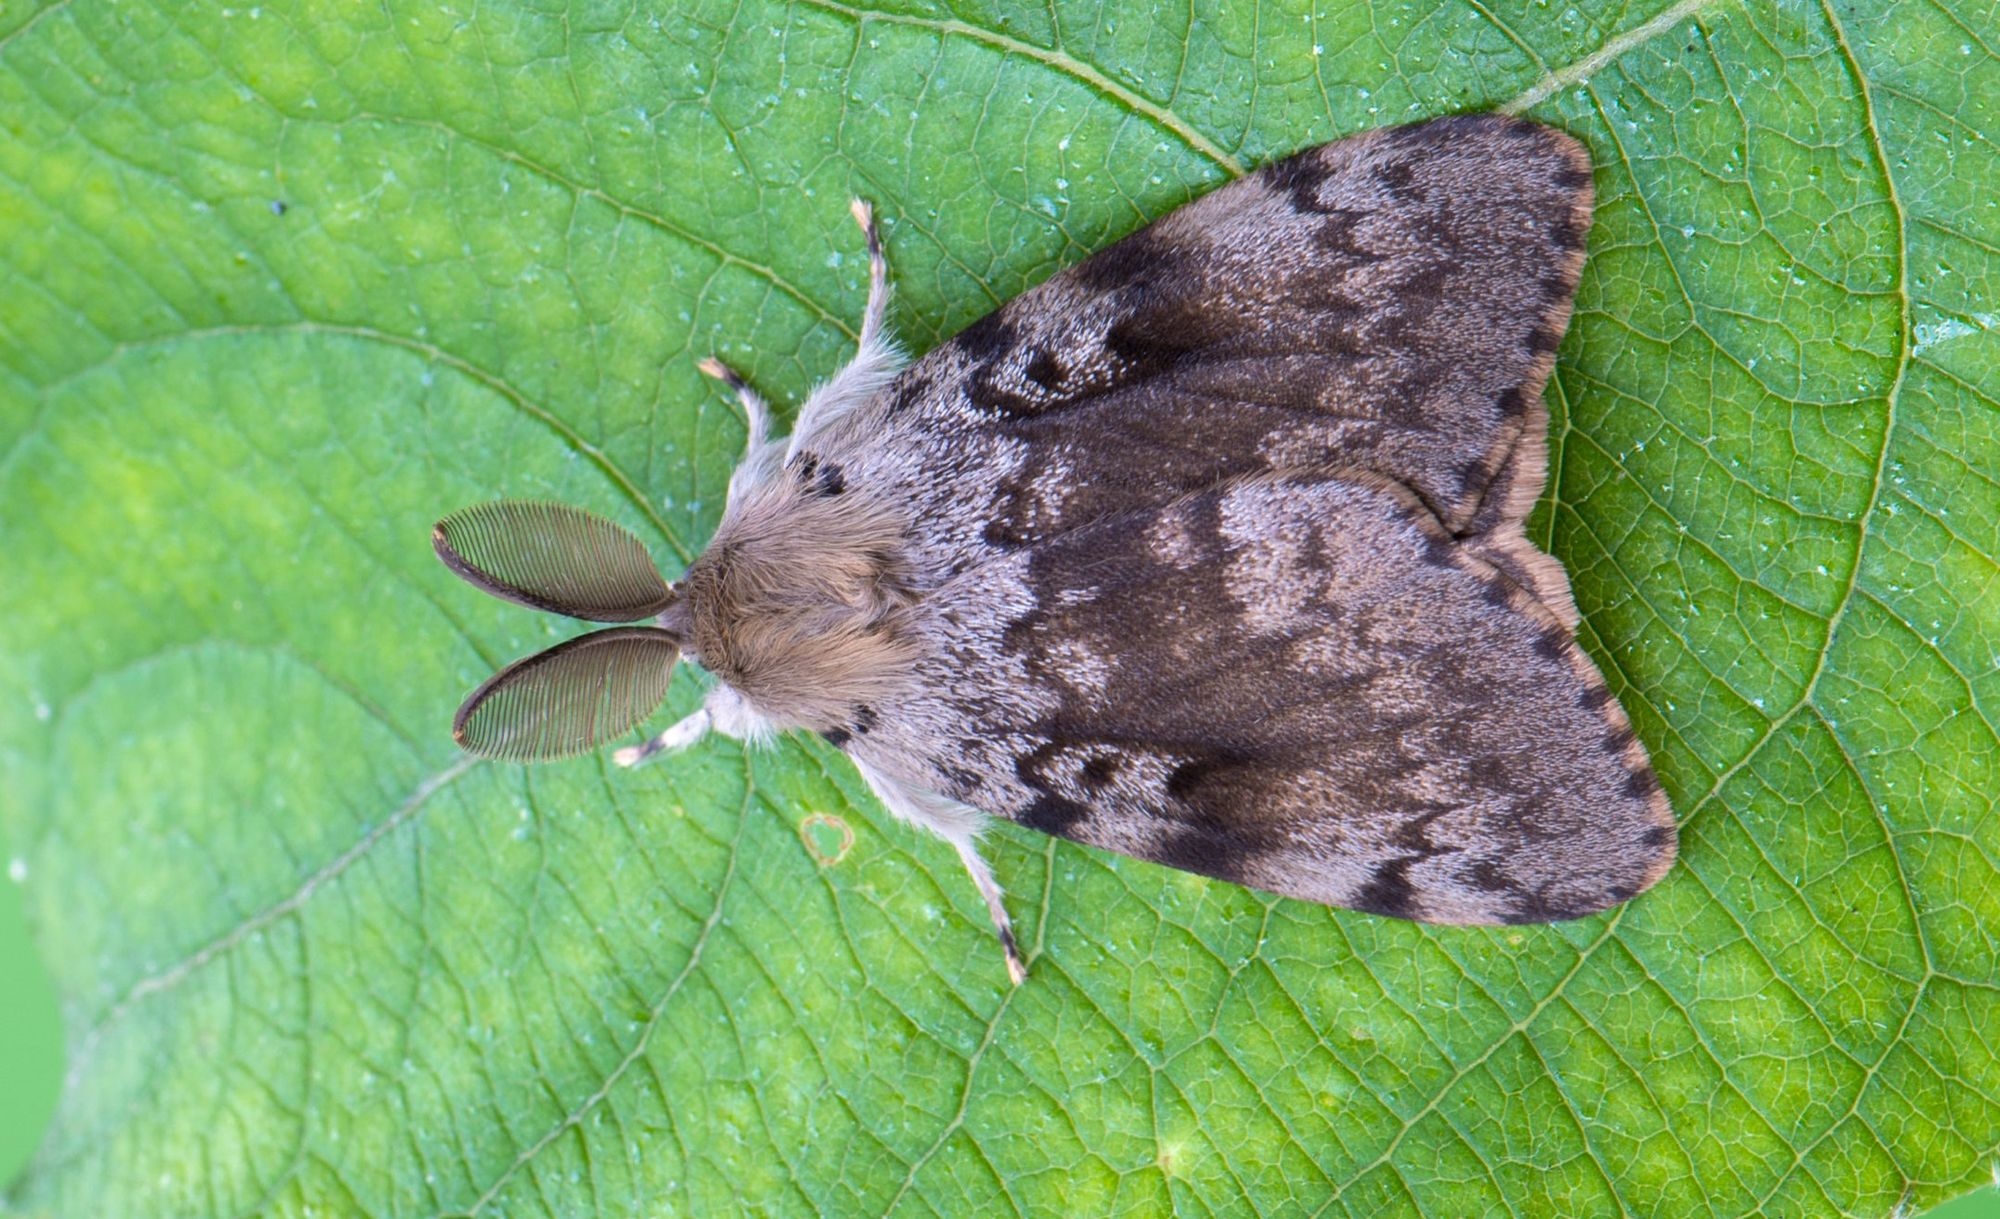 gypsy moth on leaf https://extension.unh.edu/resource/european-corn-borer-fact-sheet